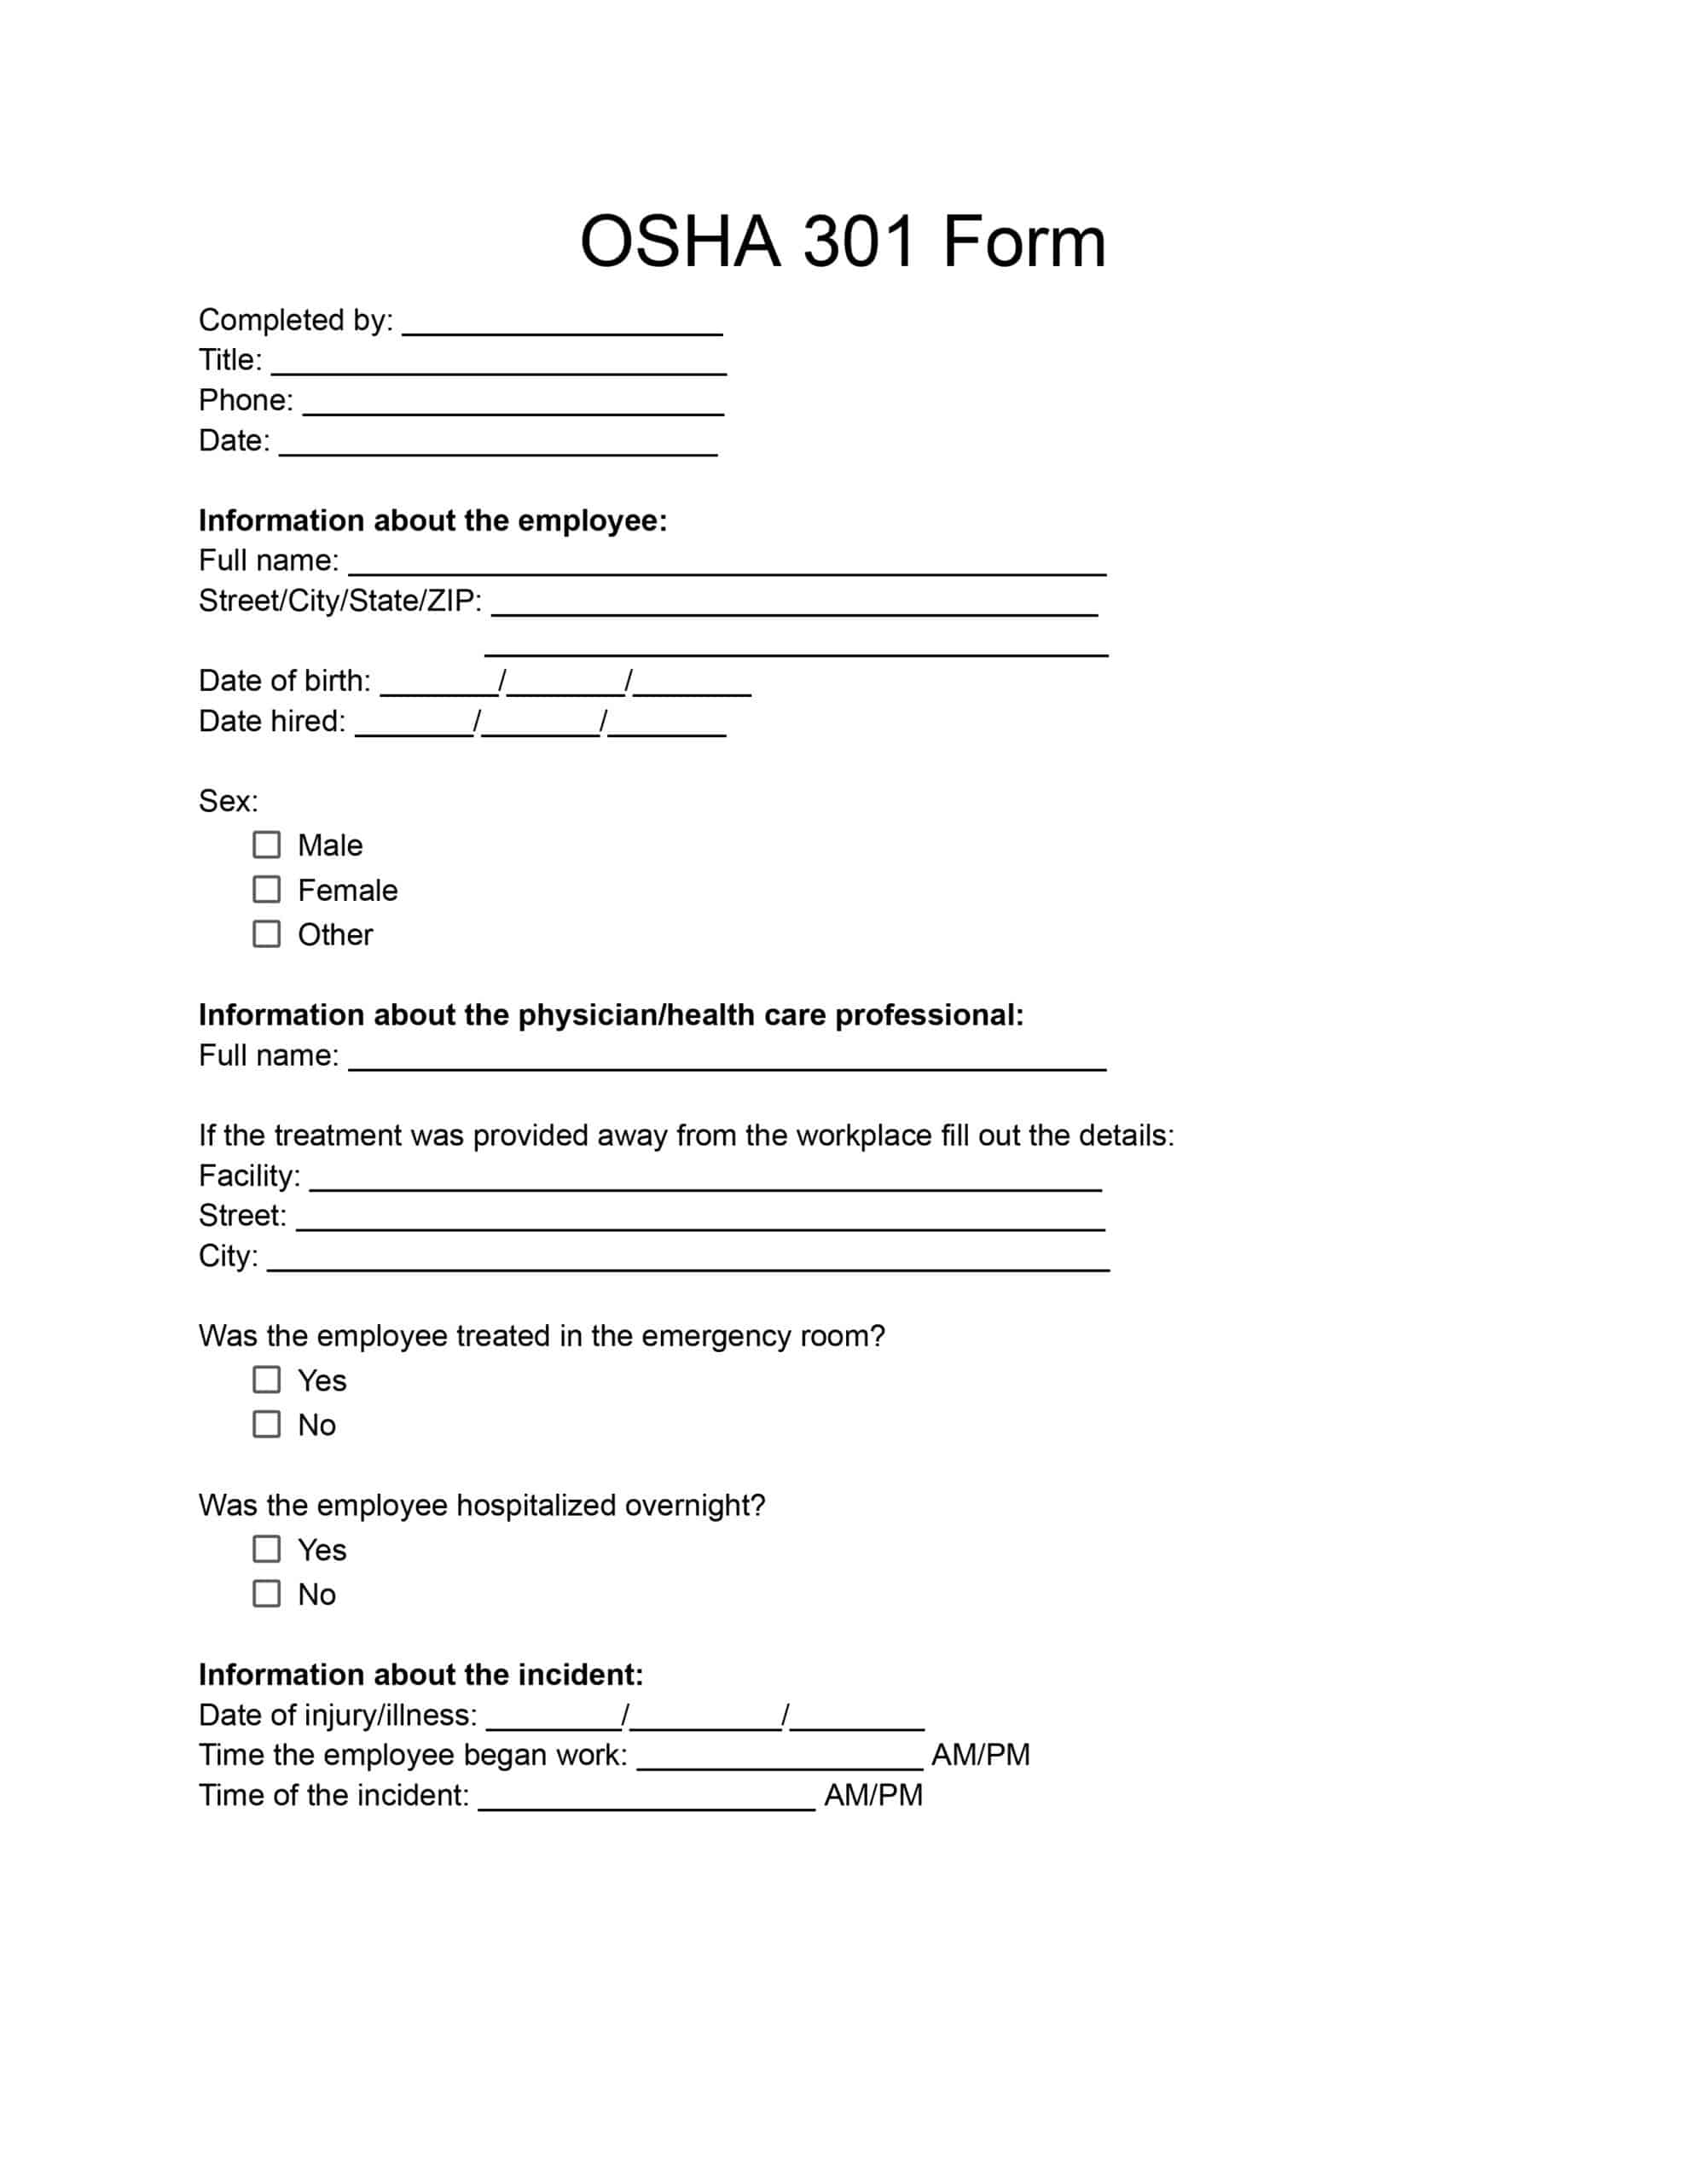 OSHA 301 Form